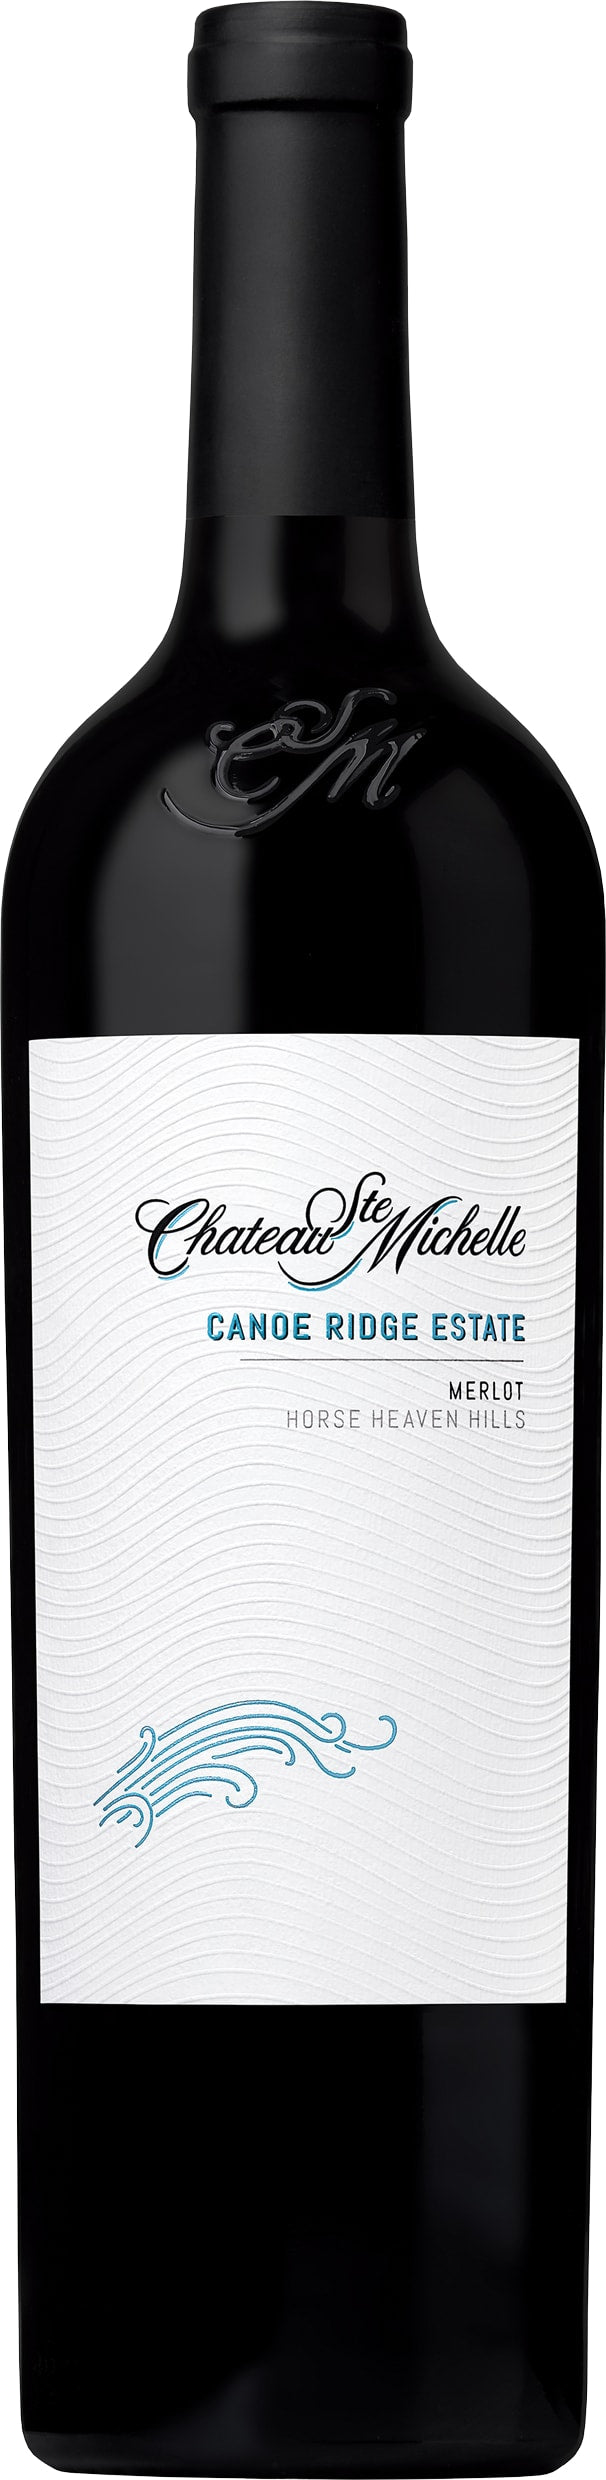 Chateau Ste Michelle Canoe Ridge Merlot 2016 75cl - Buy Chateau Ste Michelle Wines from GREAT WINES DIRECT wine shop